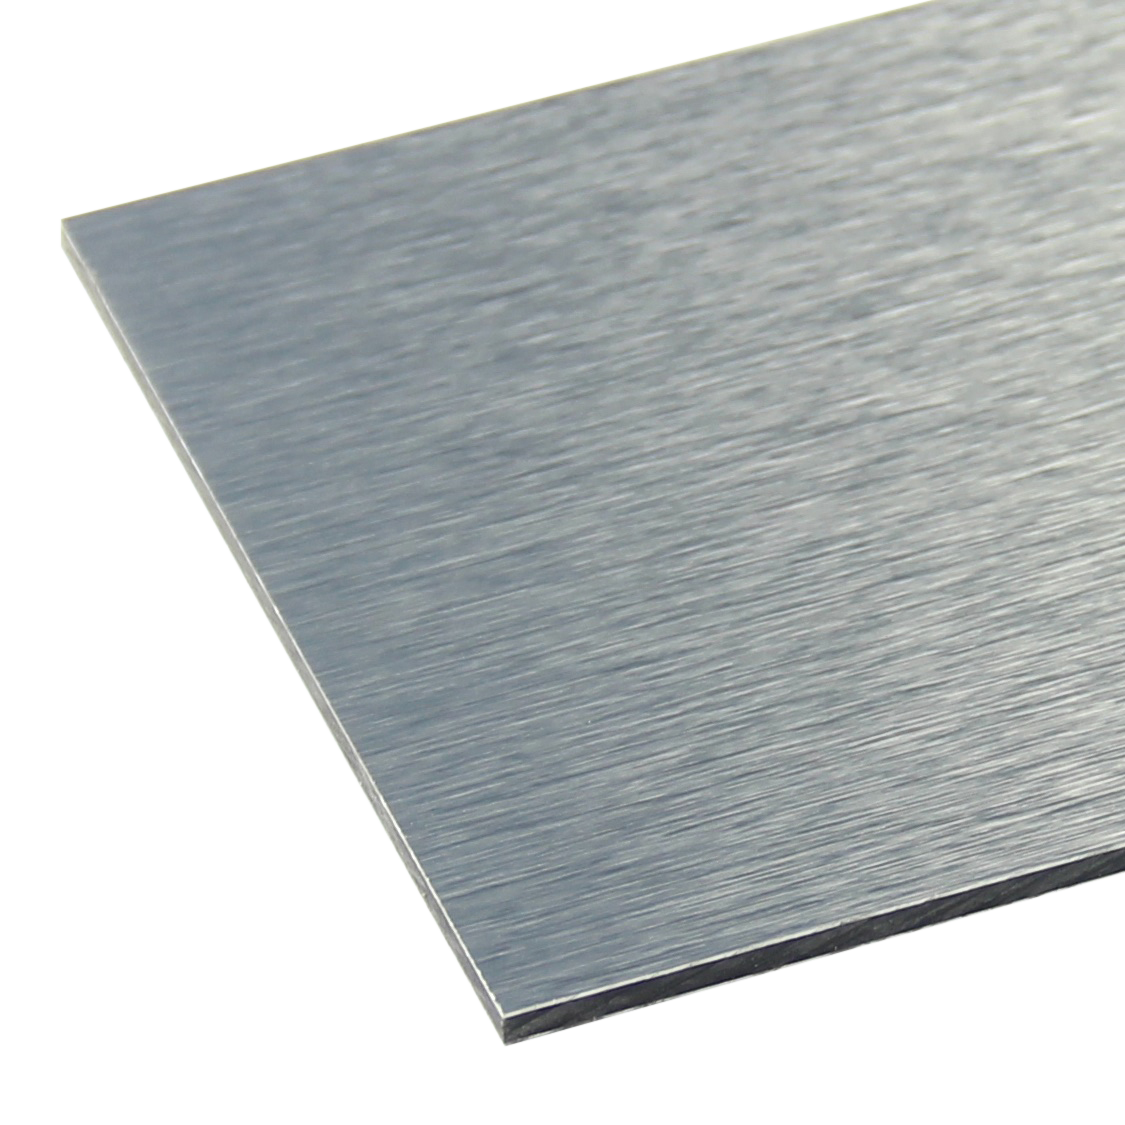 Alupanel Brushed Aluminium Sheet | Plastock